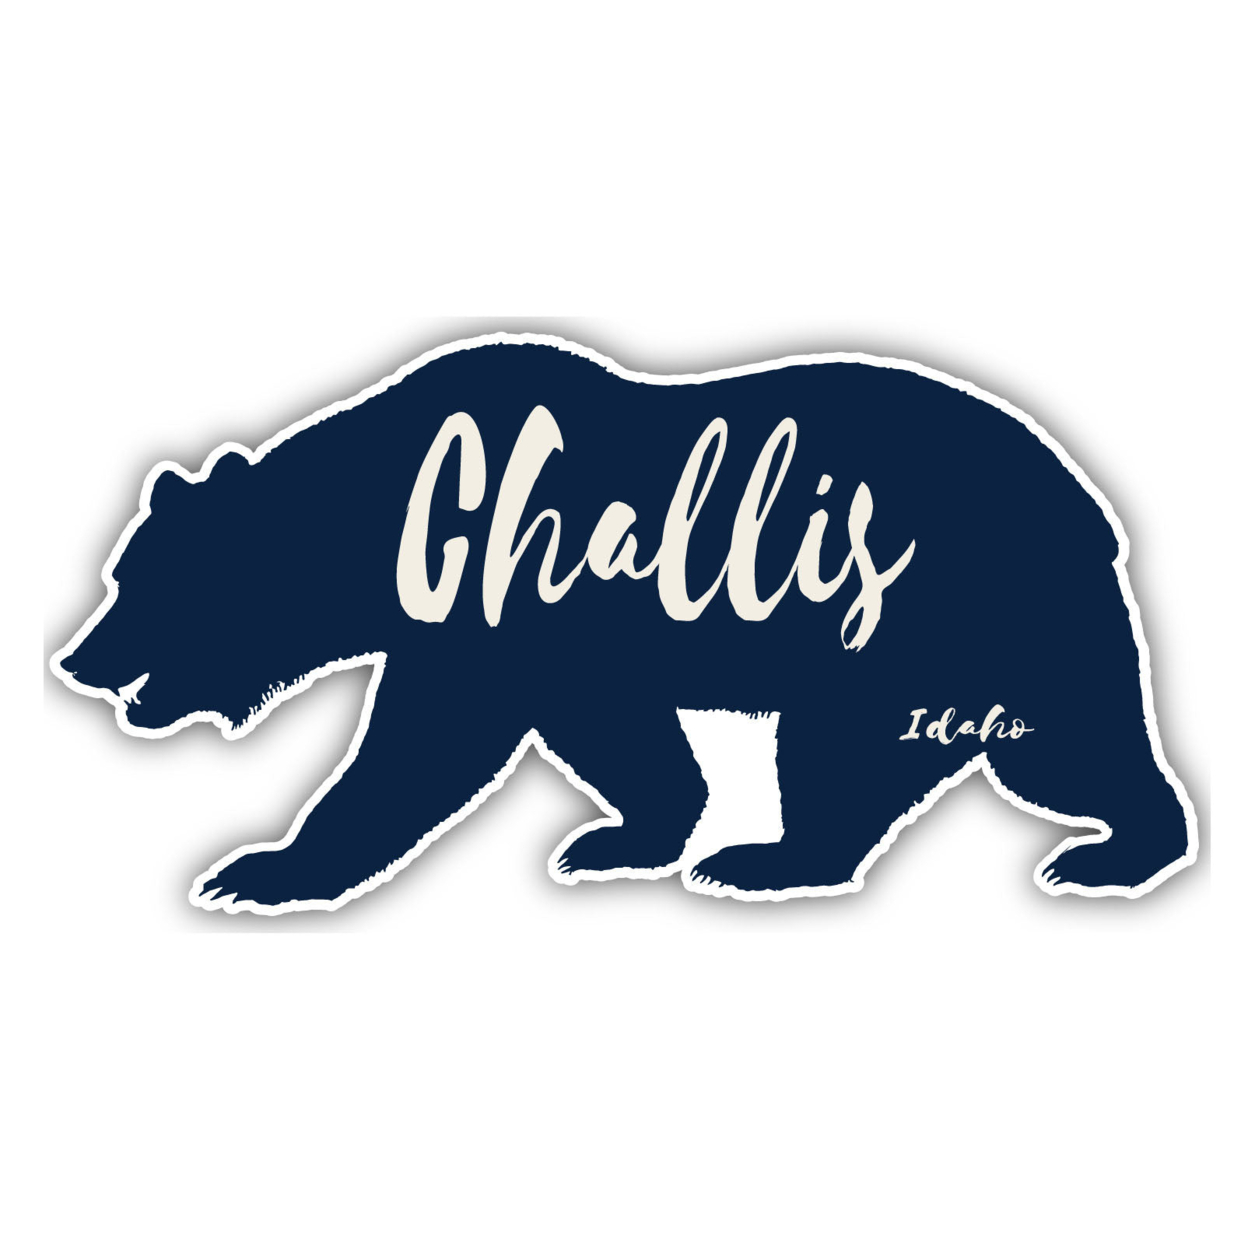 Challis Idaho Souvenir Decorative Stickers (Choose Theme And Size) - Single Unit, 2-Inch, Bear